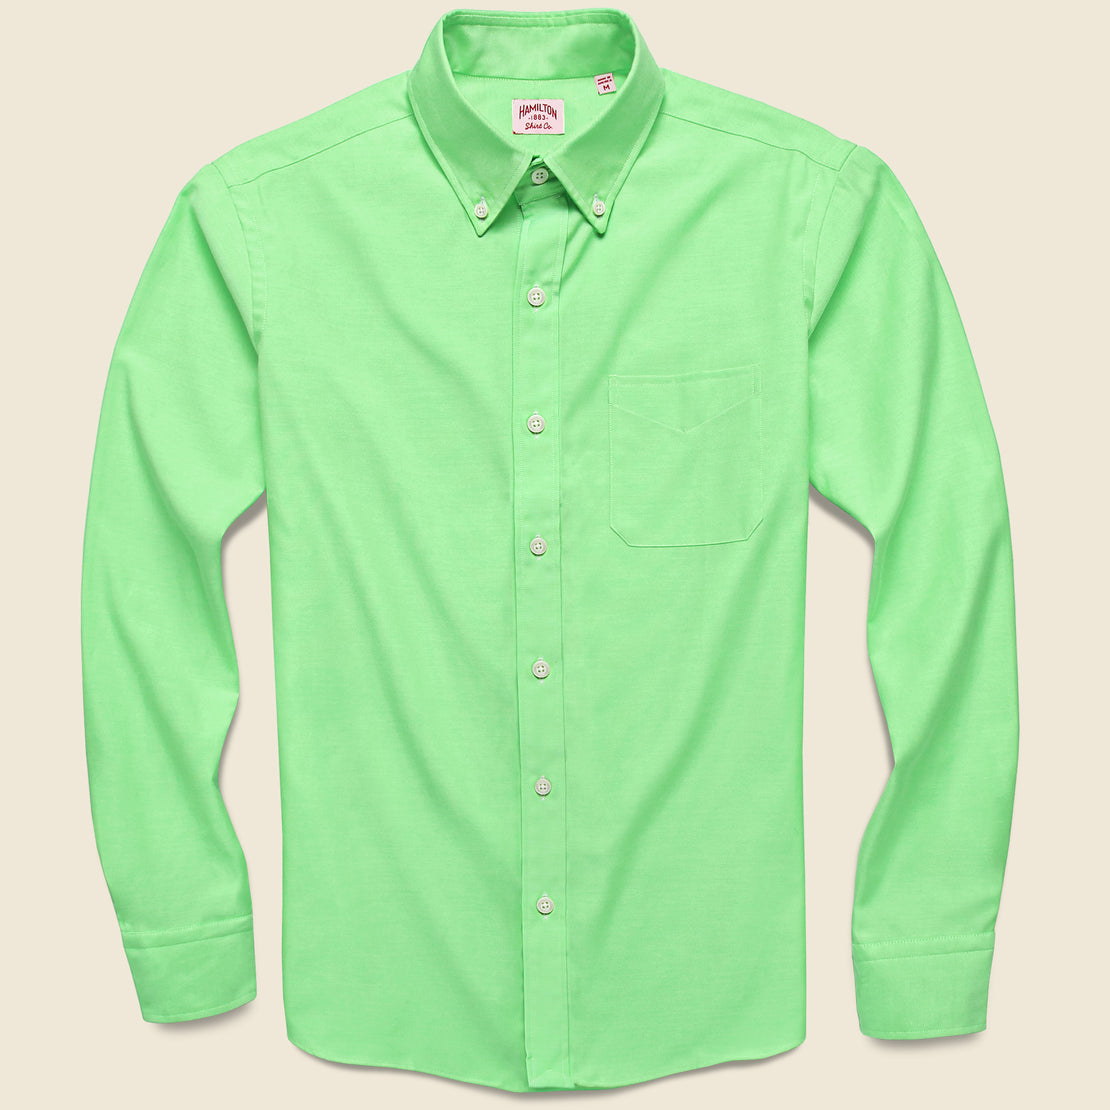 Hamilton Shirt Co. Neon Oxford Shirt - Green